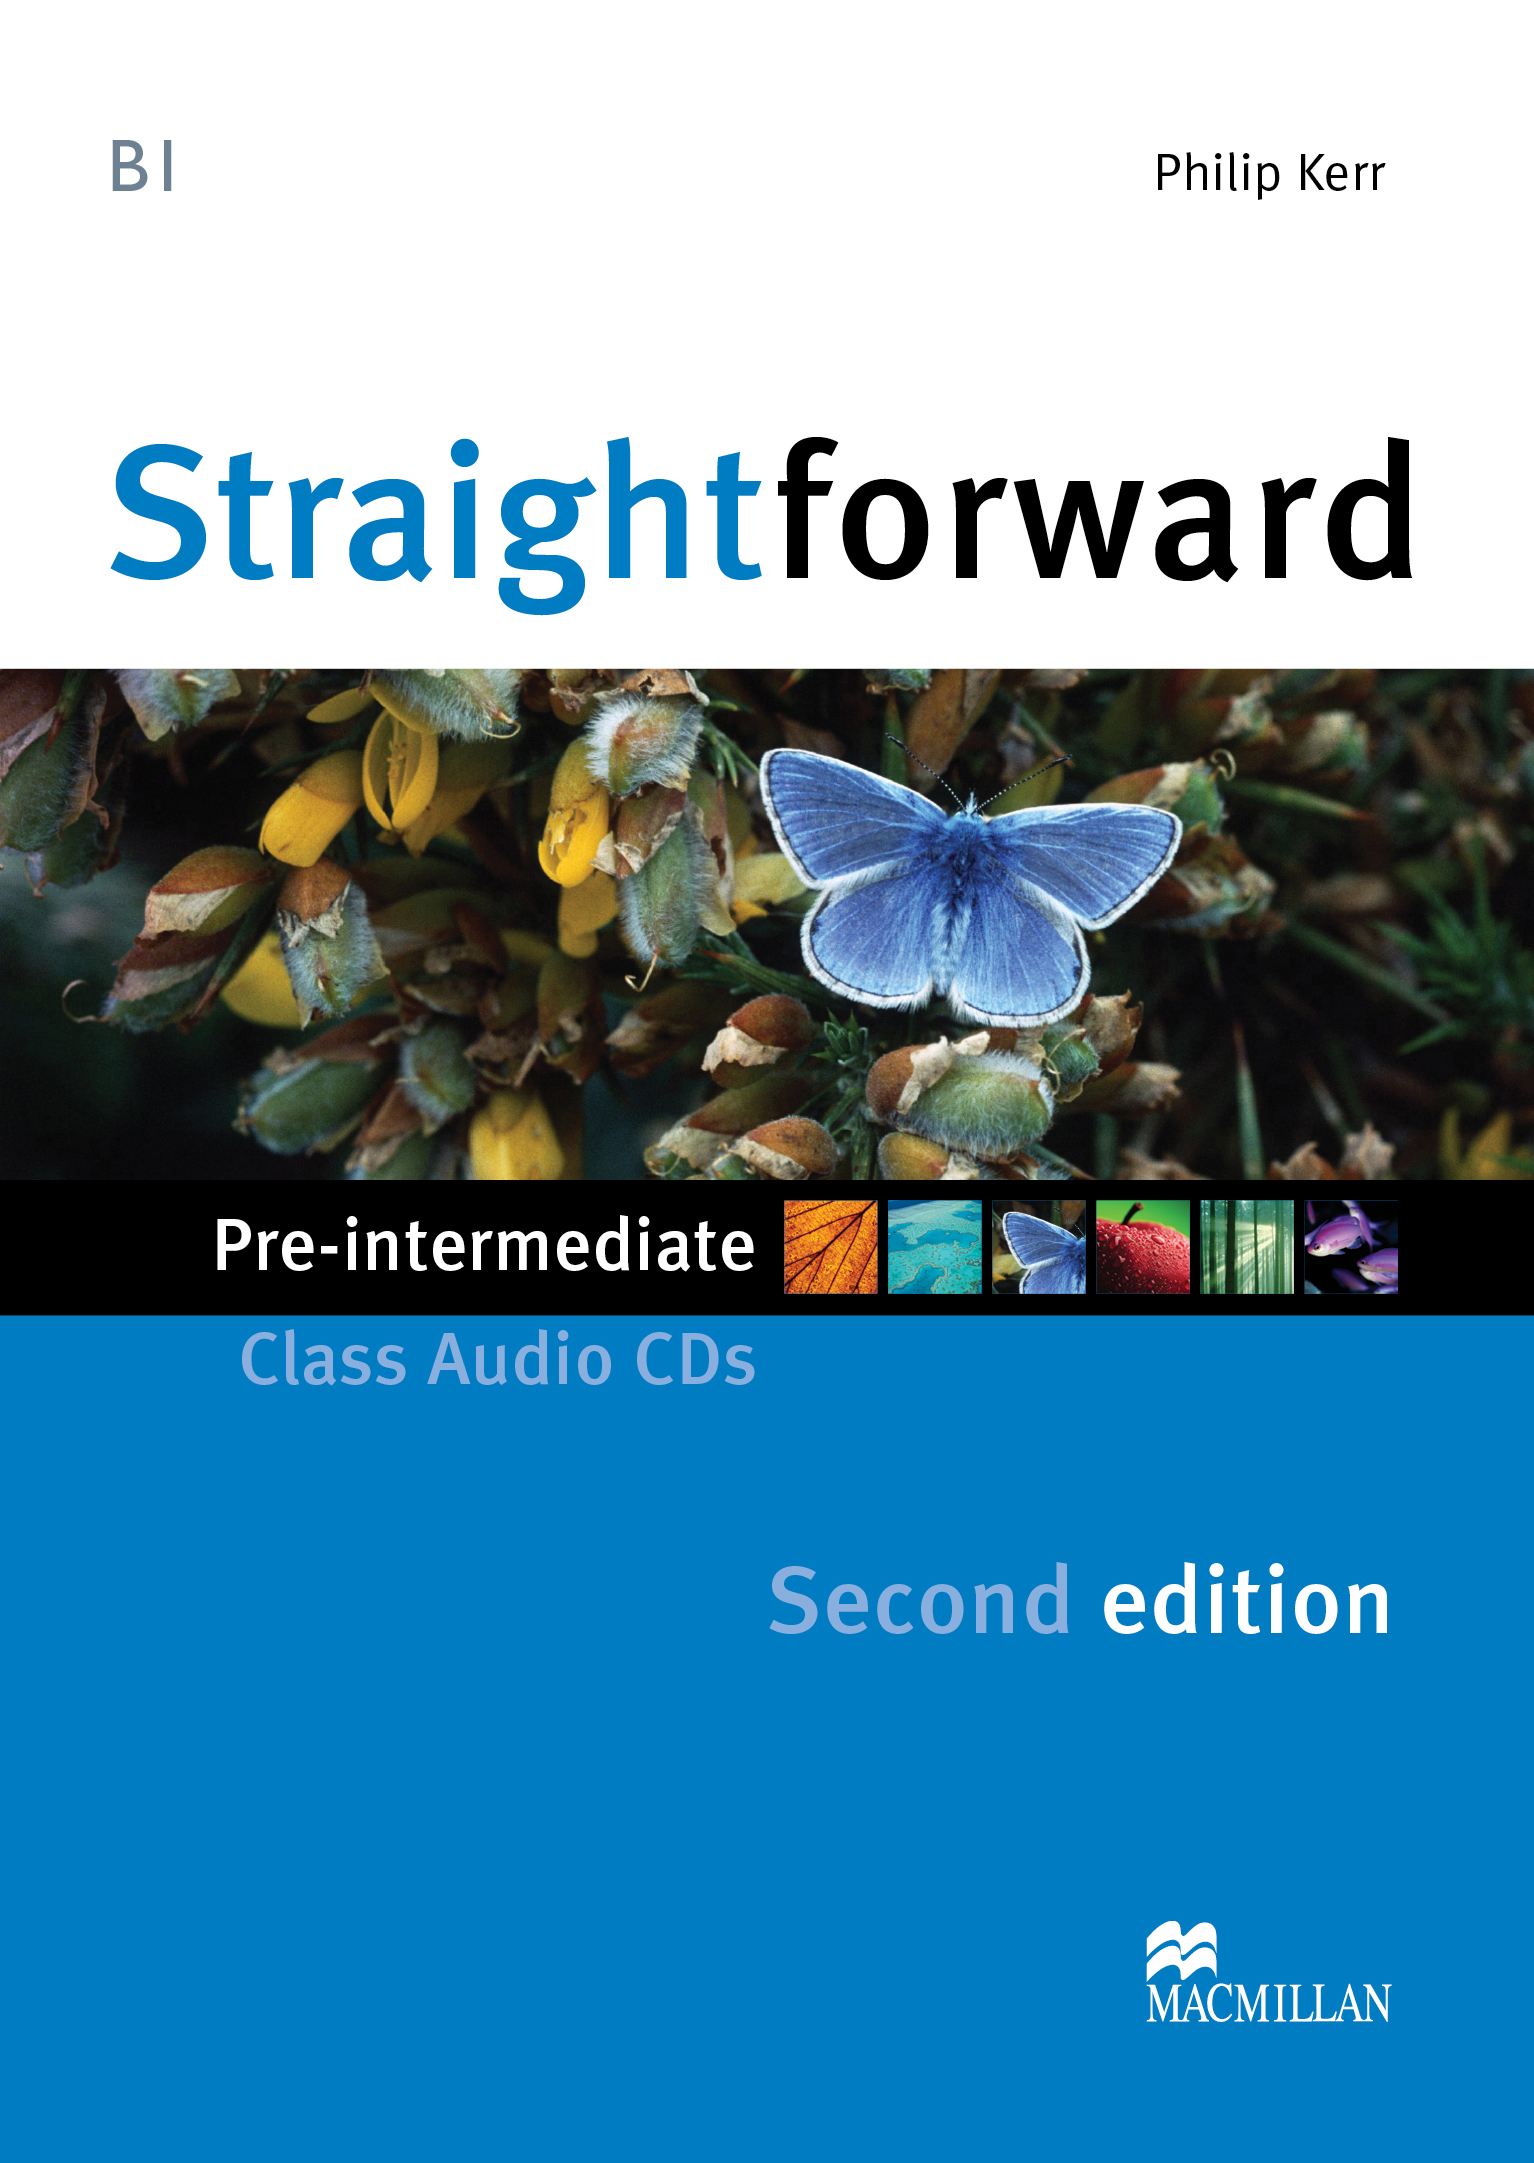 Straightforward (Second Edition) Pre-Intermediate Class Audio CDs / Аудиодиски